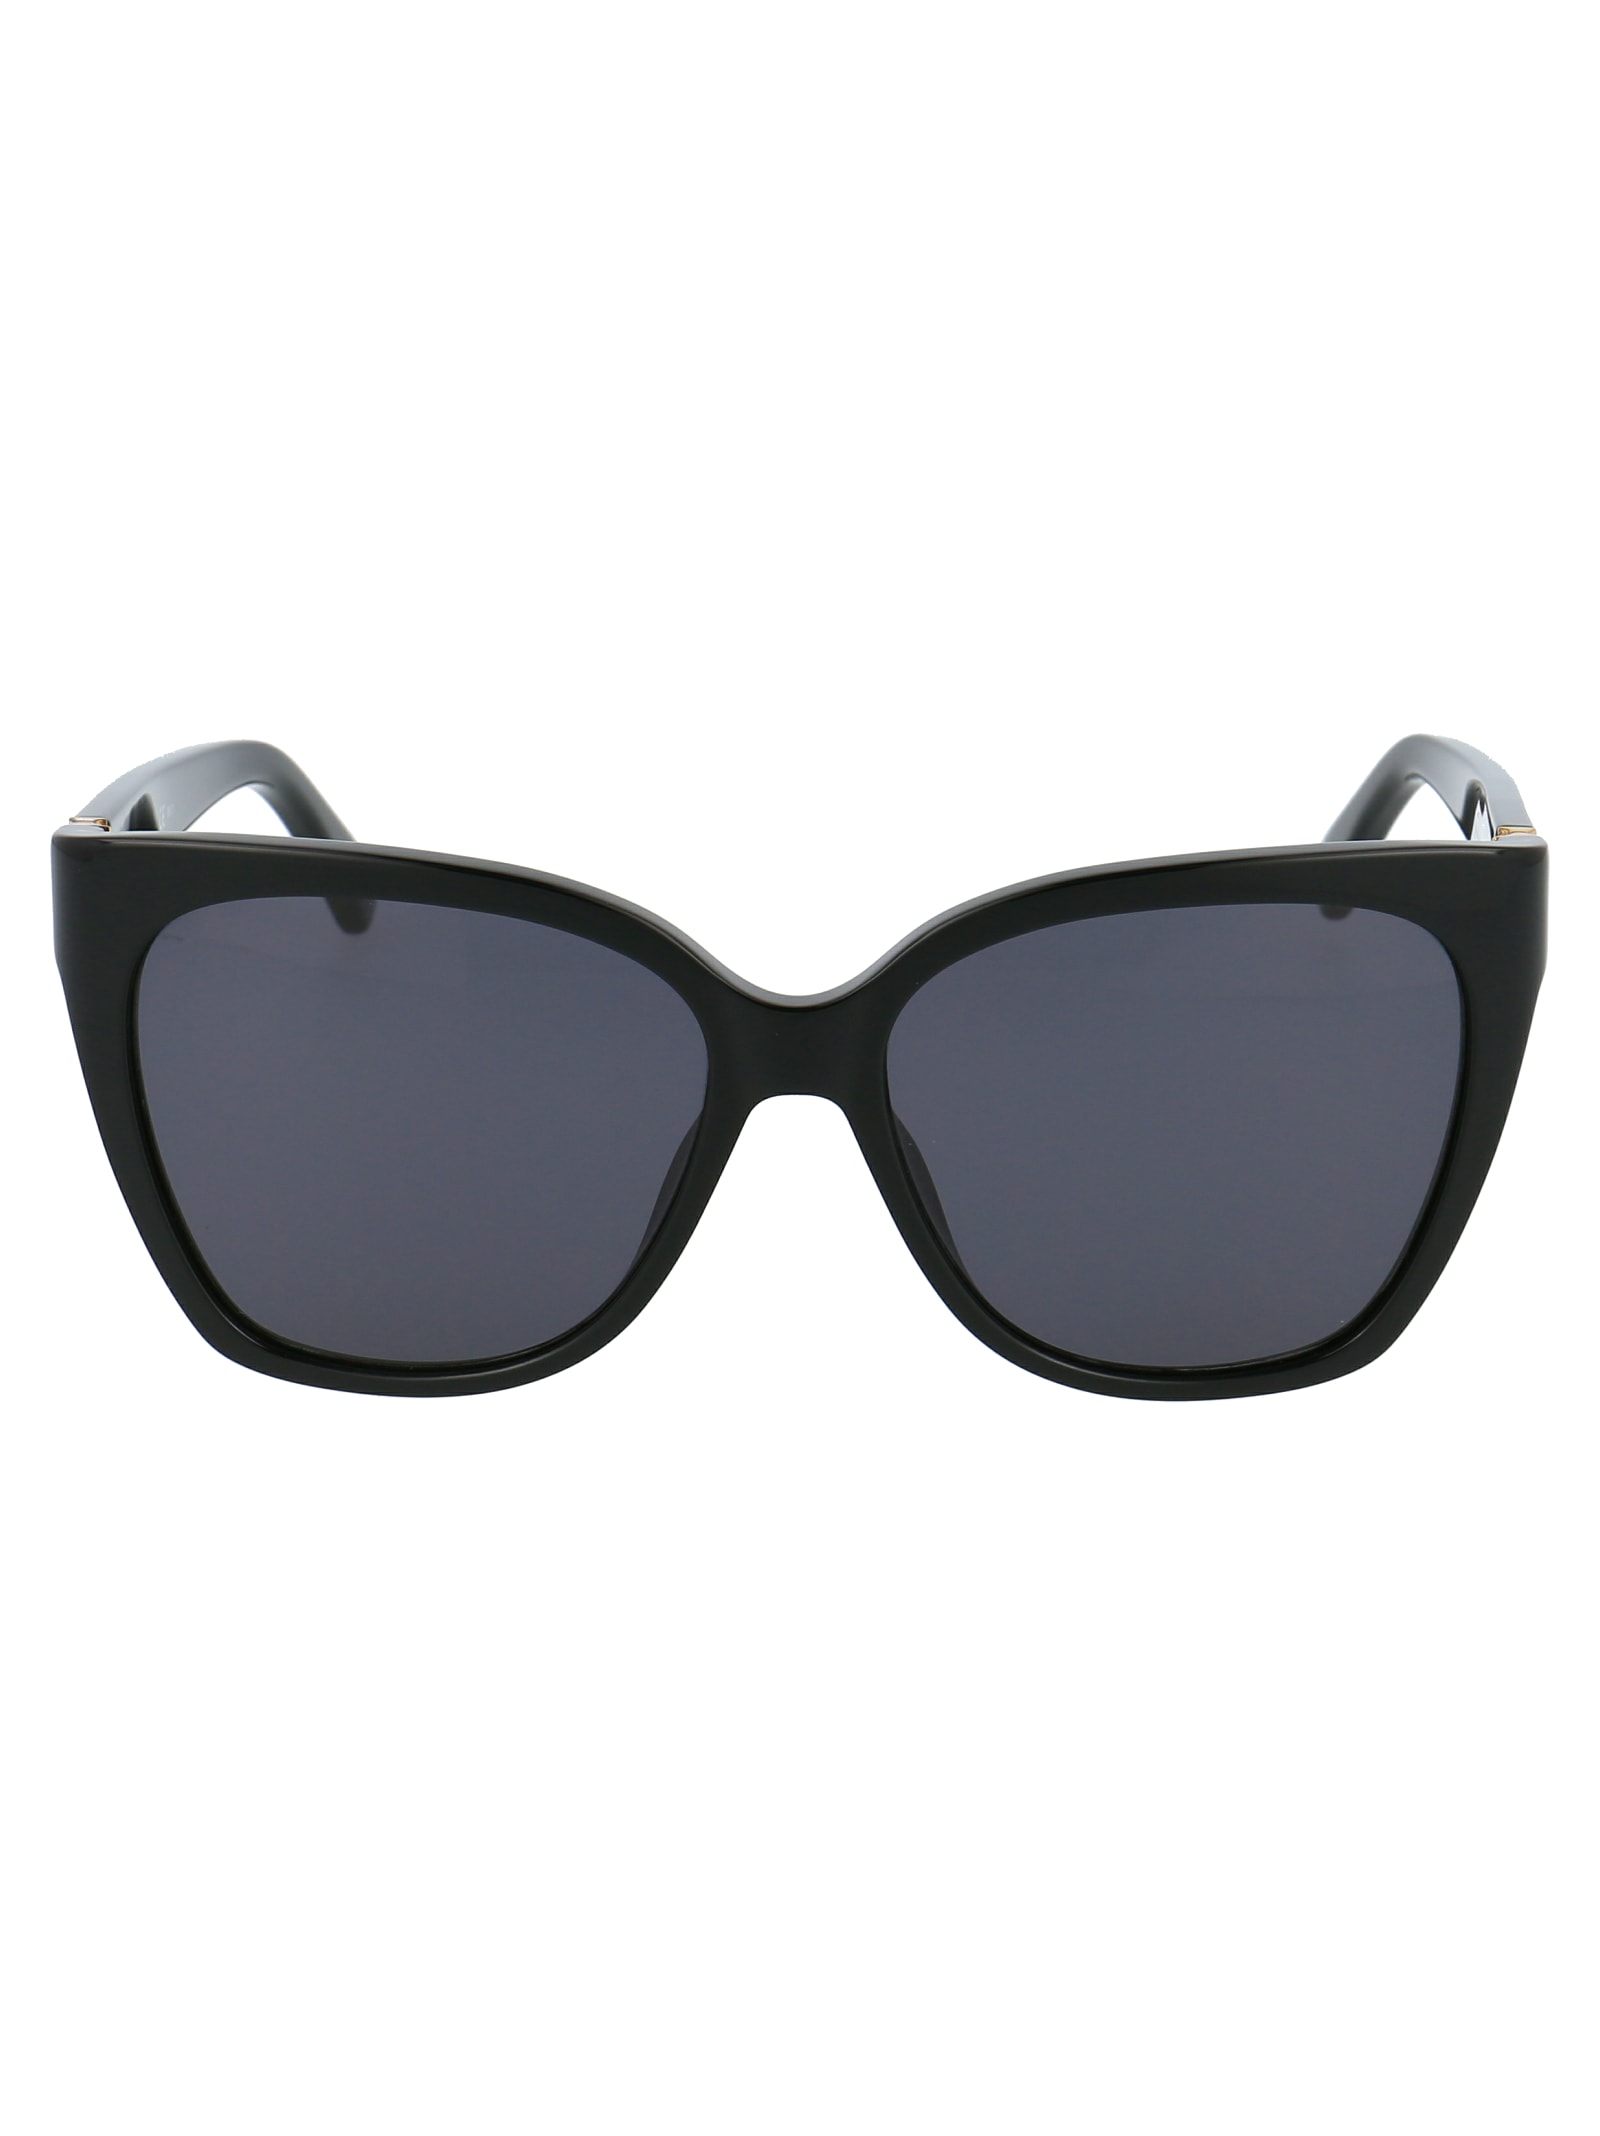 Moschino Mos066/s Sunglasses